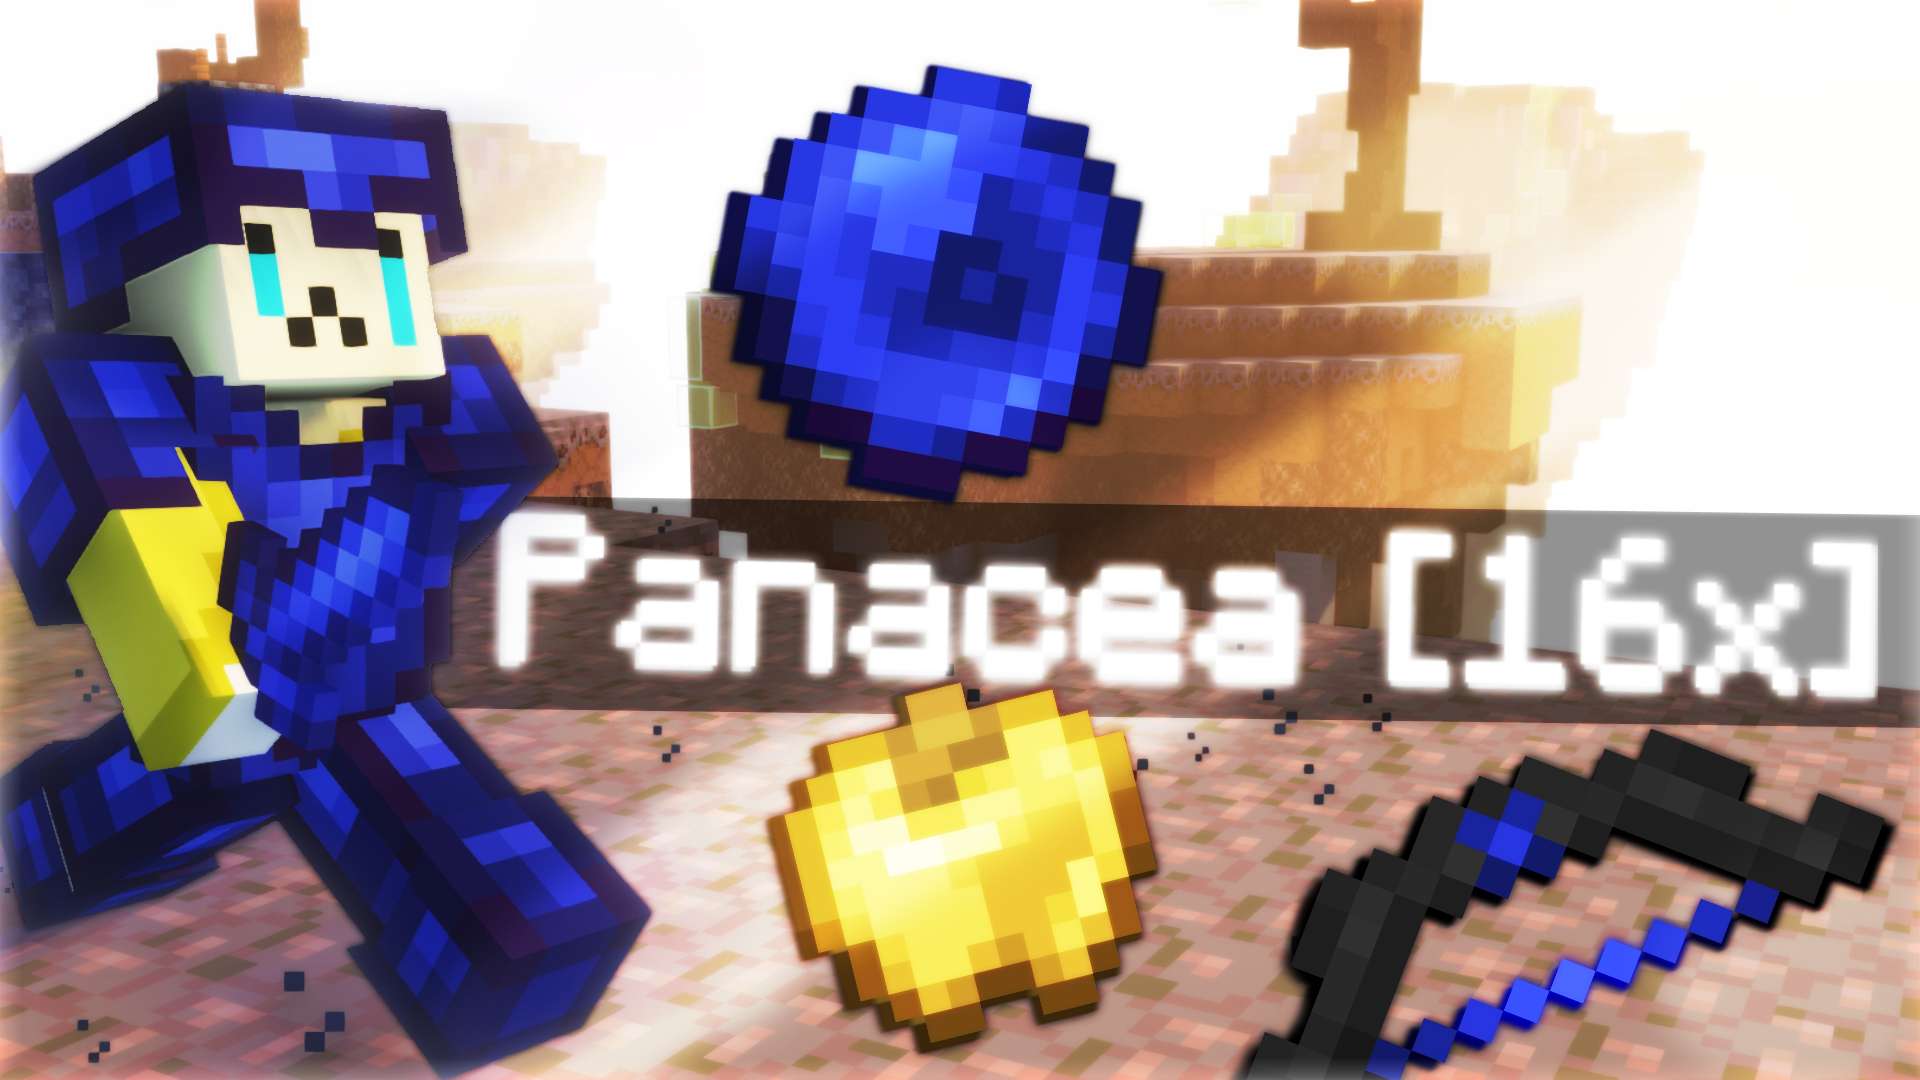 Panacea  (collab with Jaxxthatsall_) 16x by Bananess & Jaxxthatsall_ on PvPRP